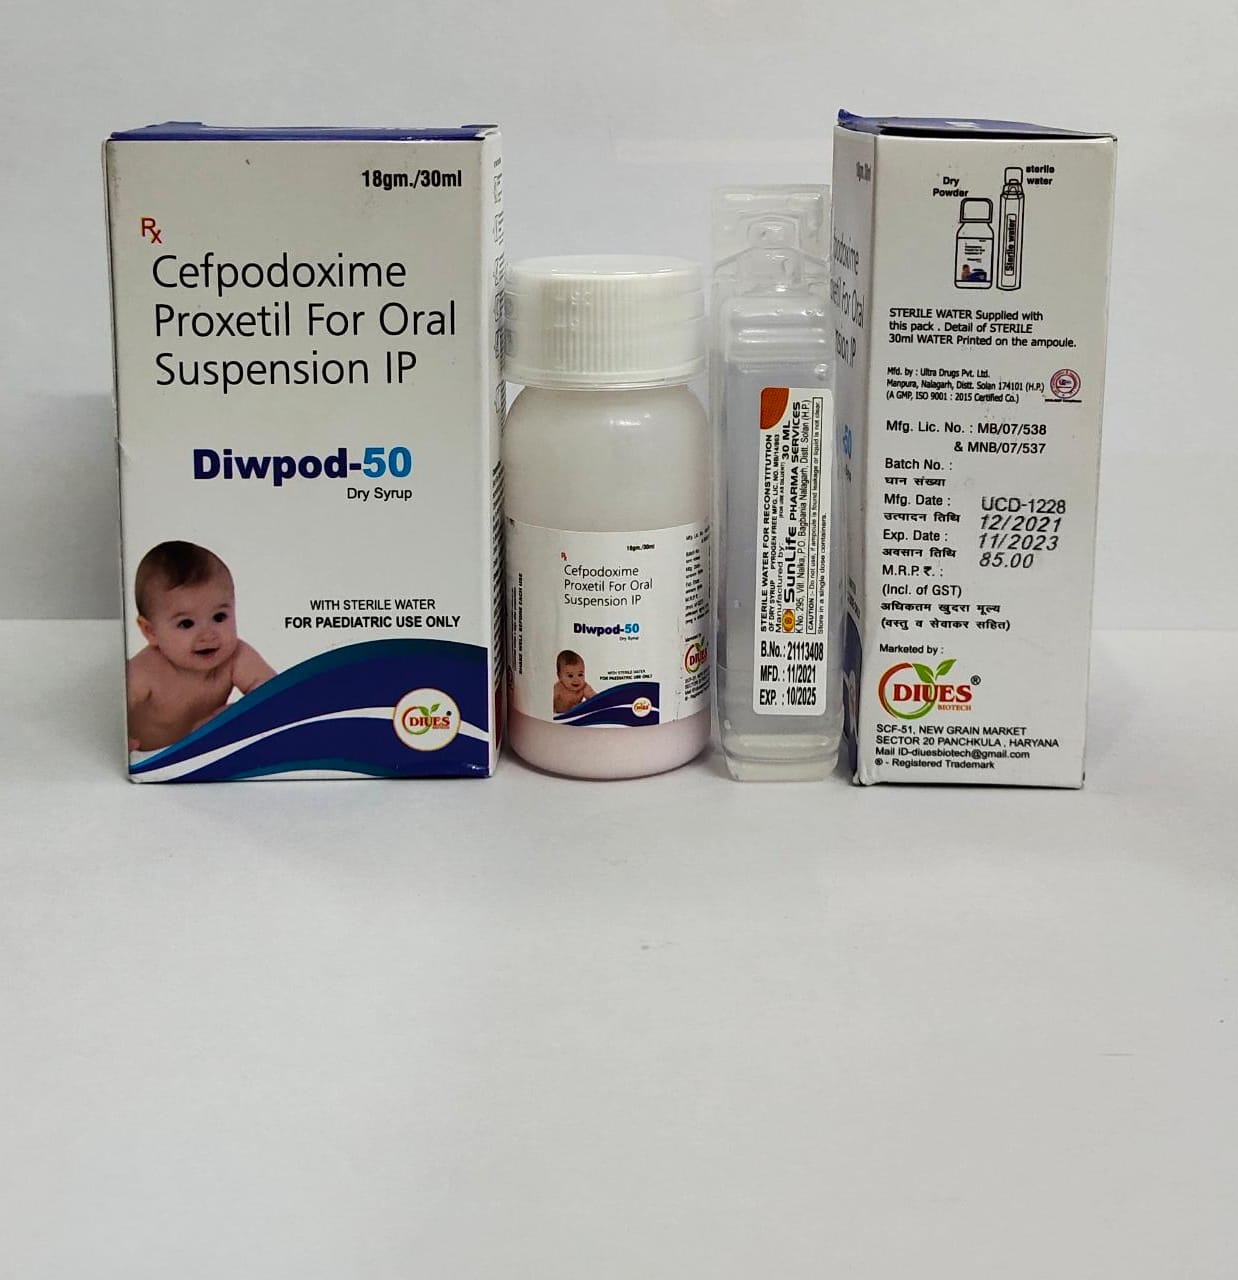 DIWPOD-50 Dry Syrup